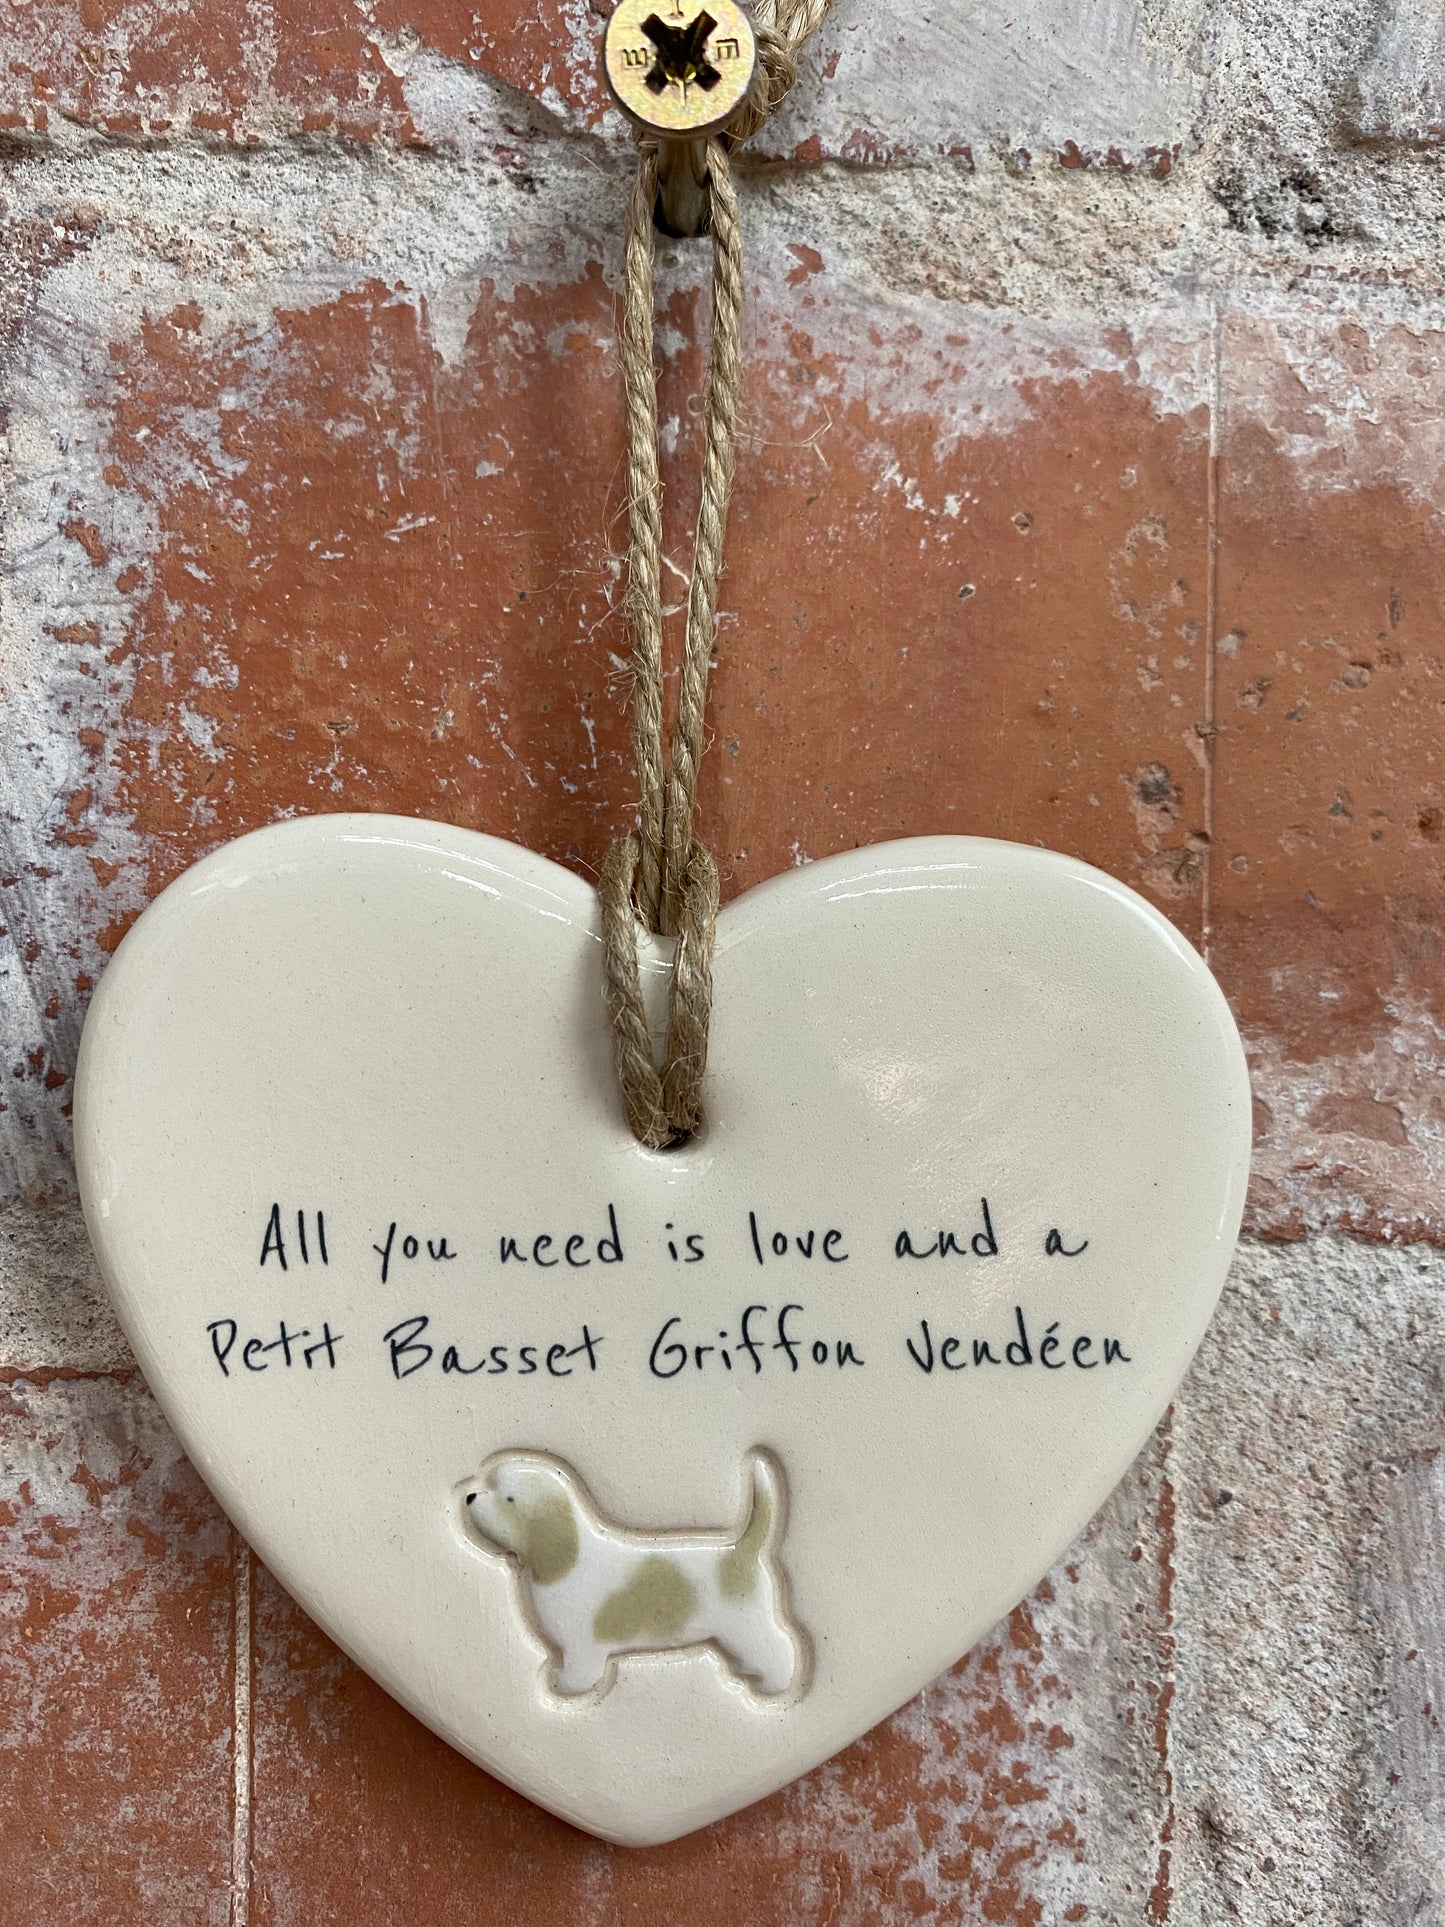 Petit Basset Griffon Vendéen ceramic heart